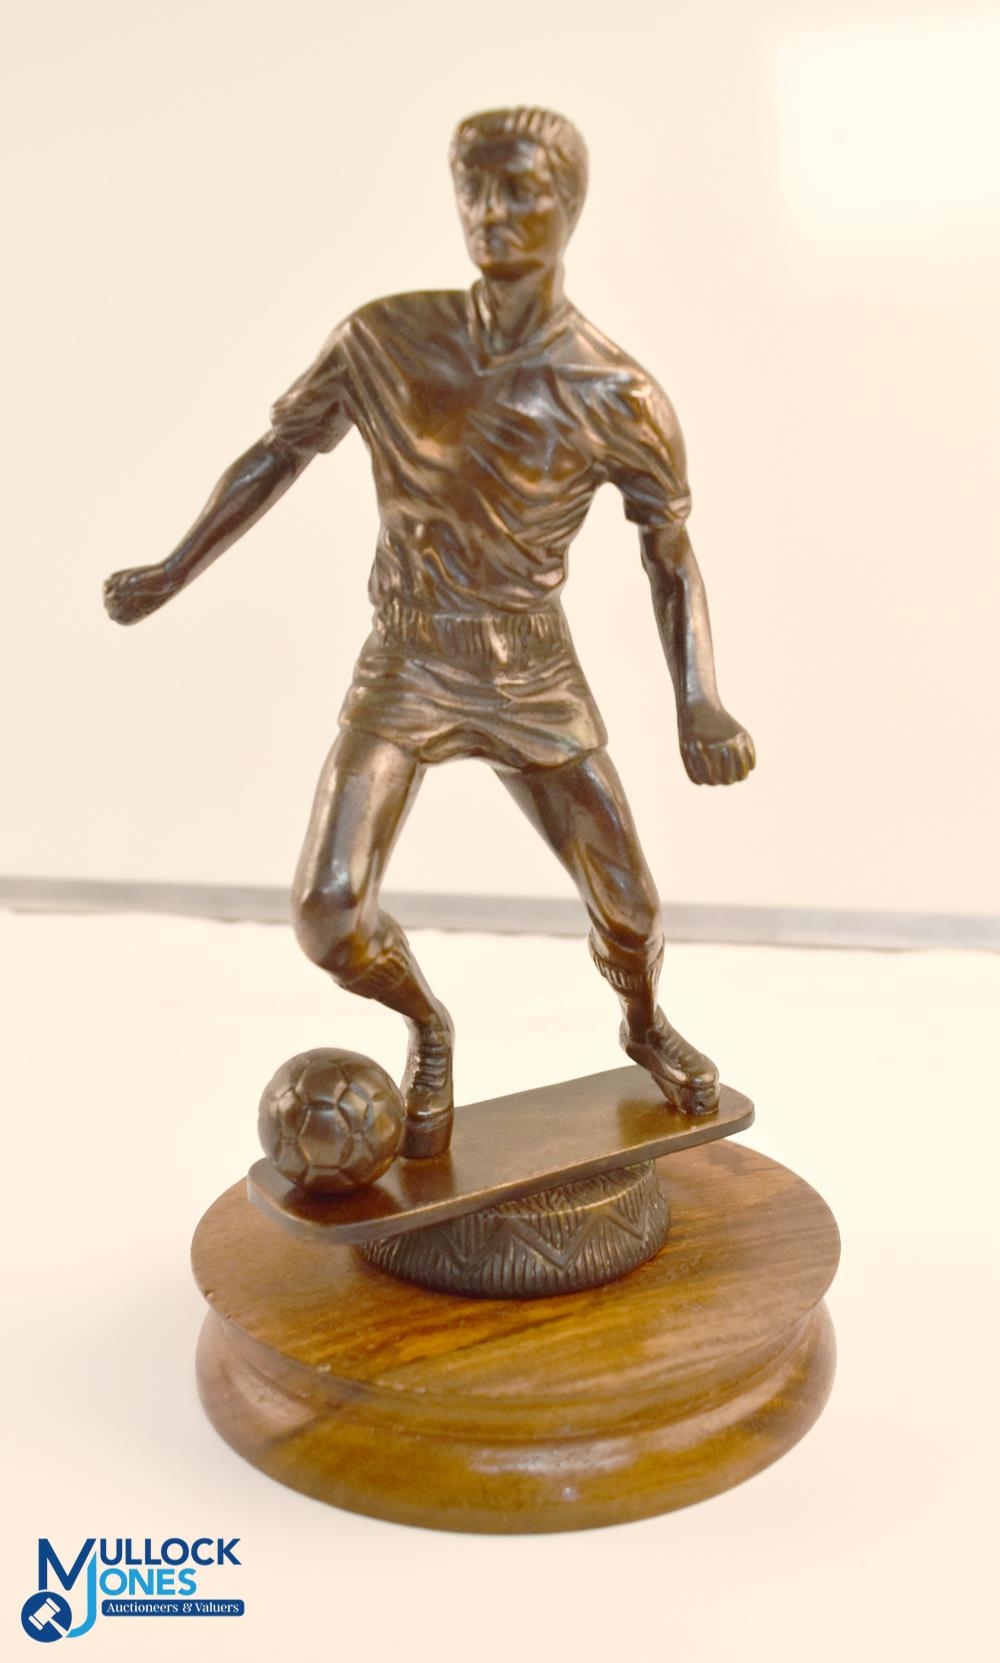 A bronze football statue on a wooden plinth. Size 9'' height, 5'' diameter base.